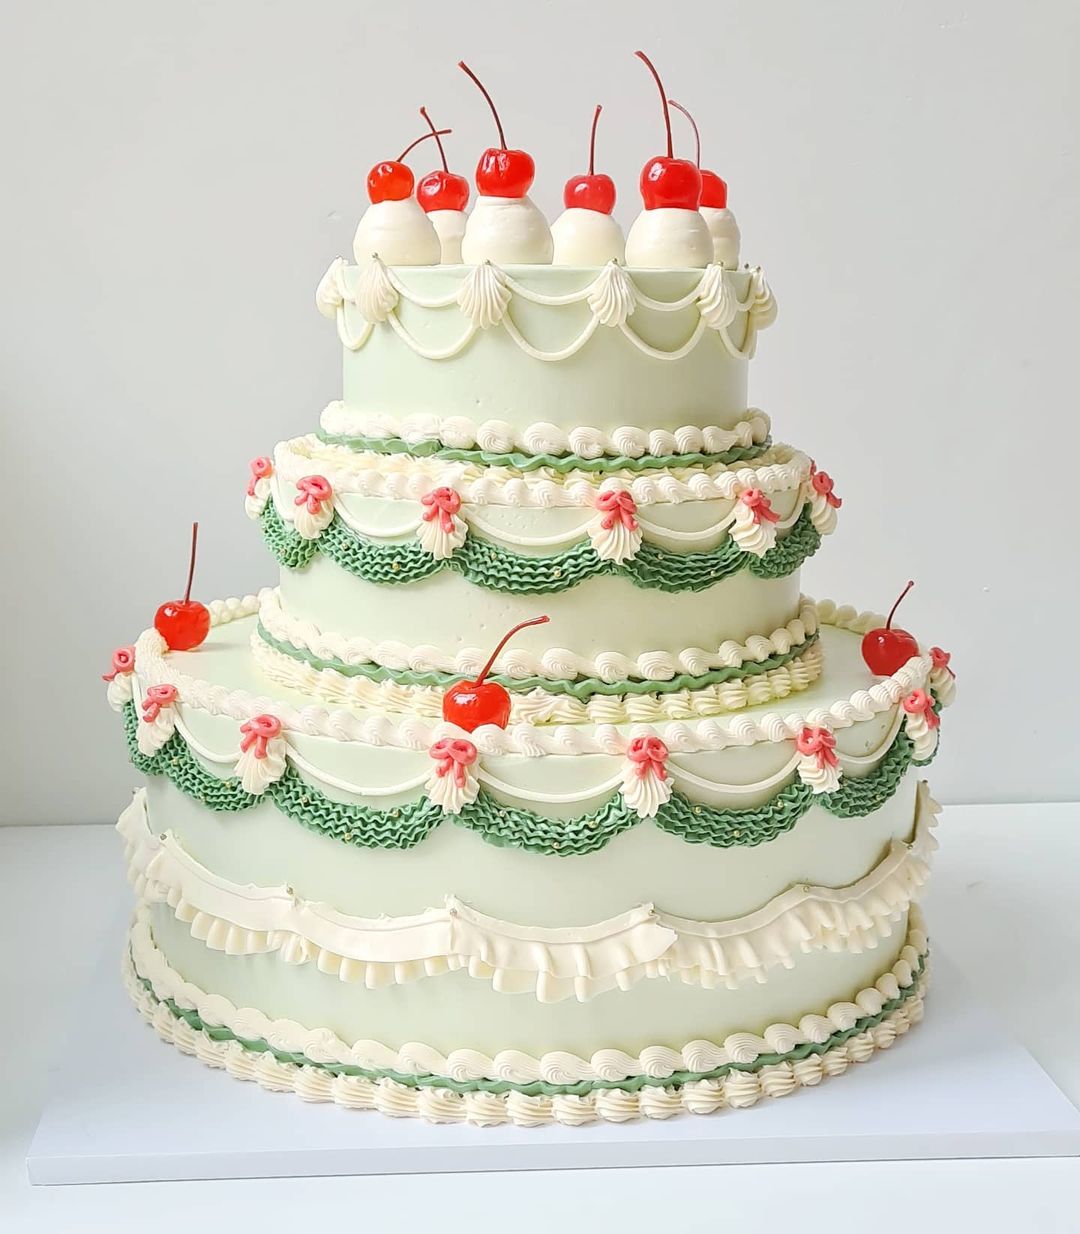 lily-vanilli-bakery-london-cake-glitter-cherries-cherry-decoration